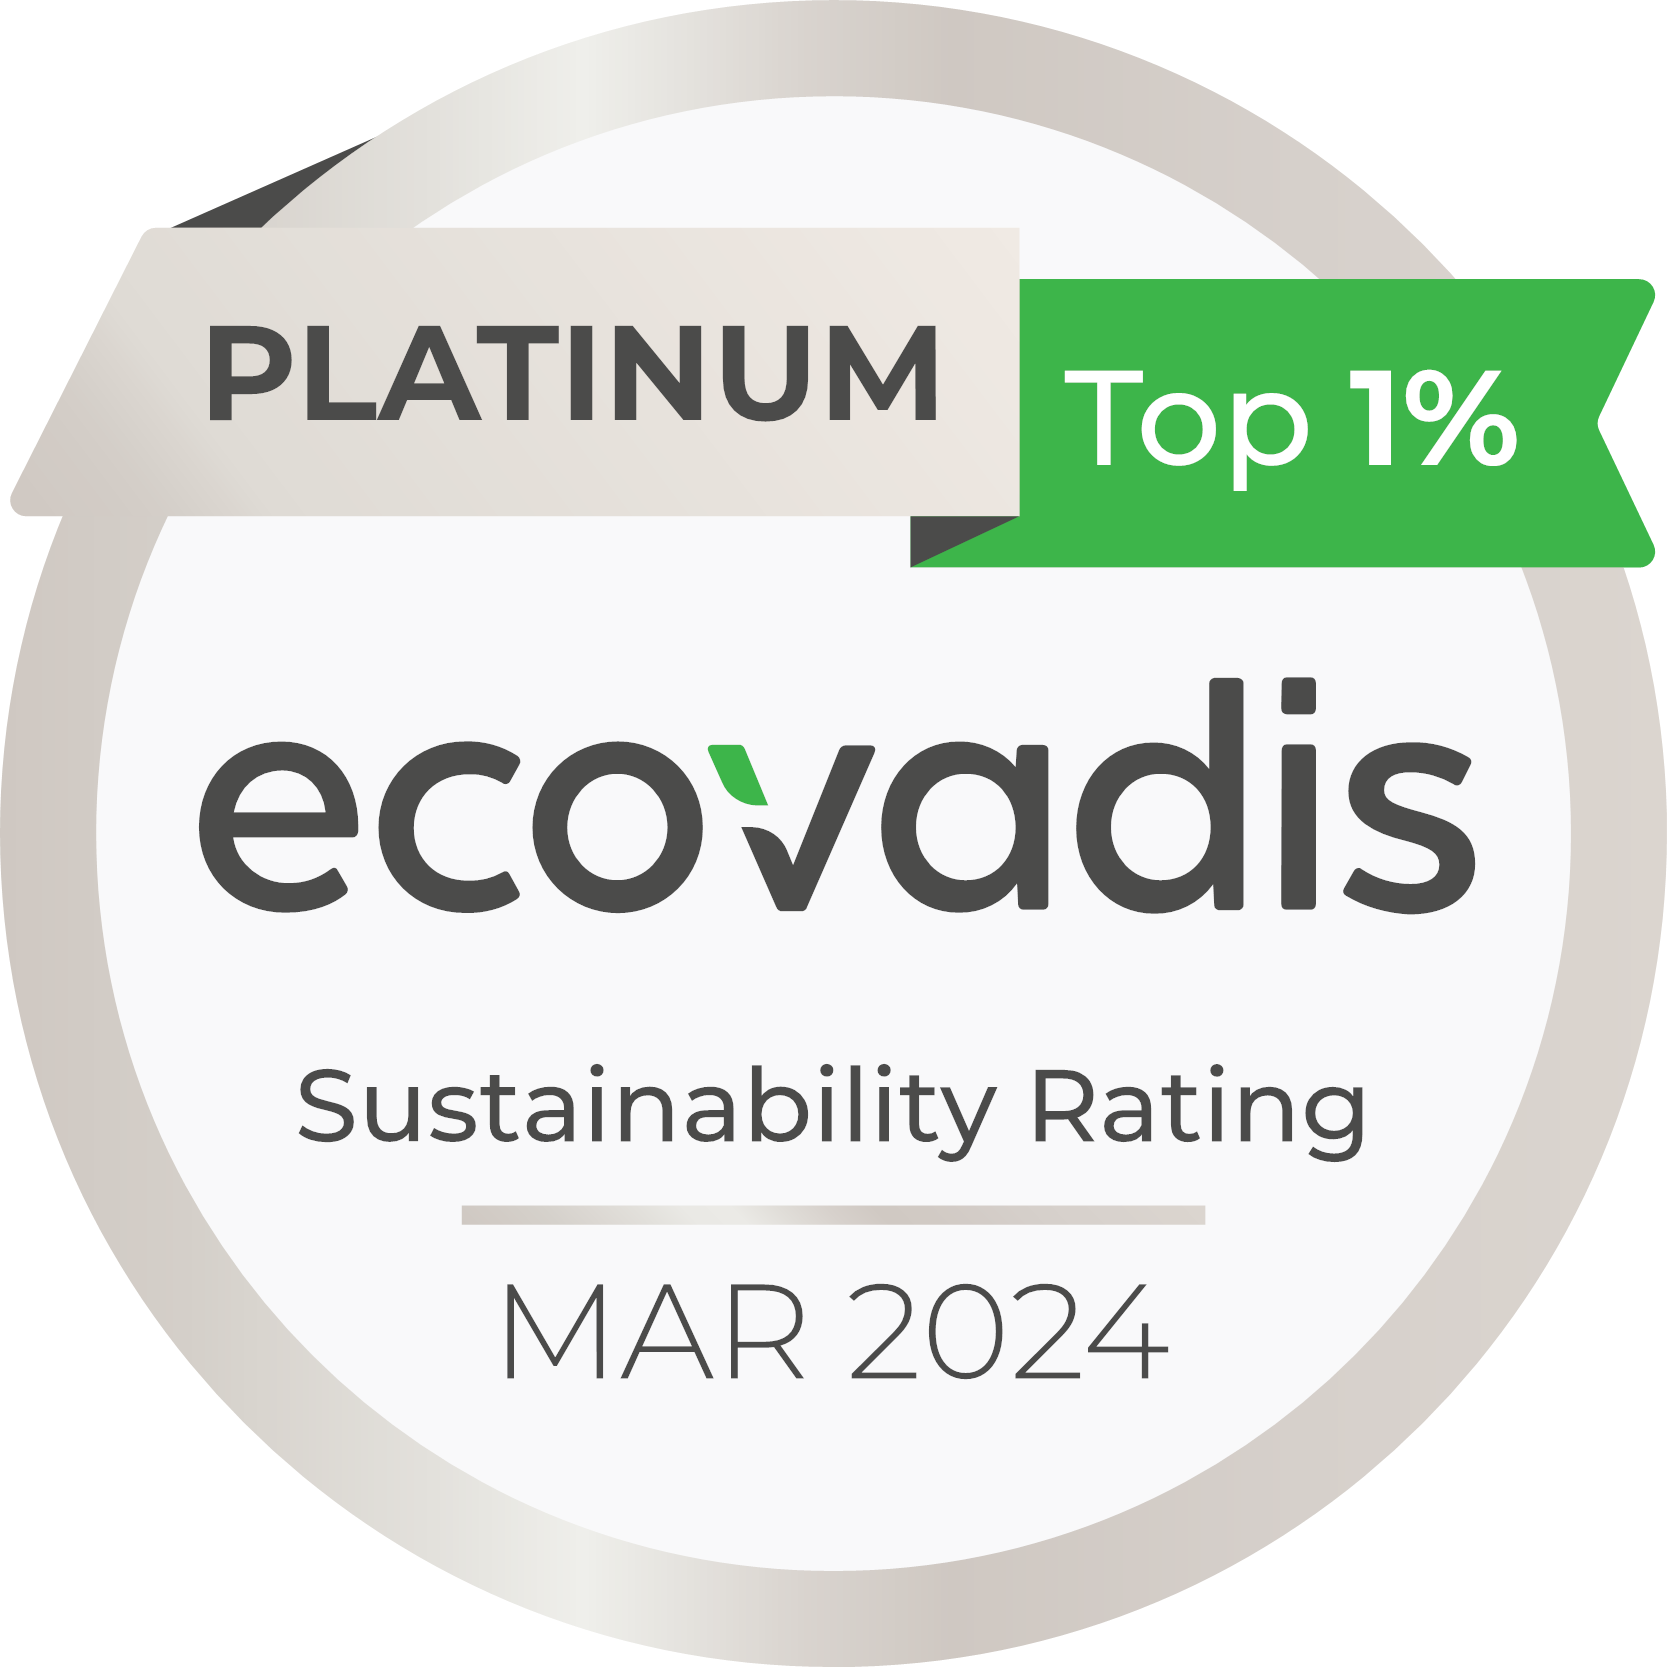 PLATINUM Top 1% ecovadis Sustainability Rating MAR 2024